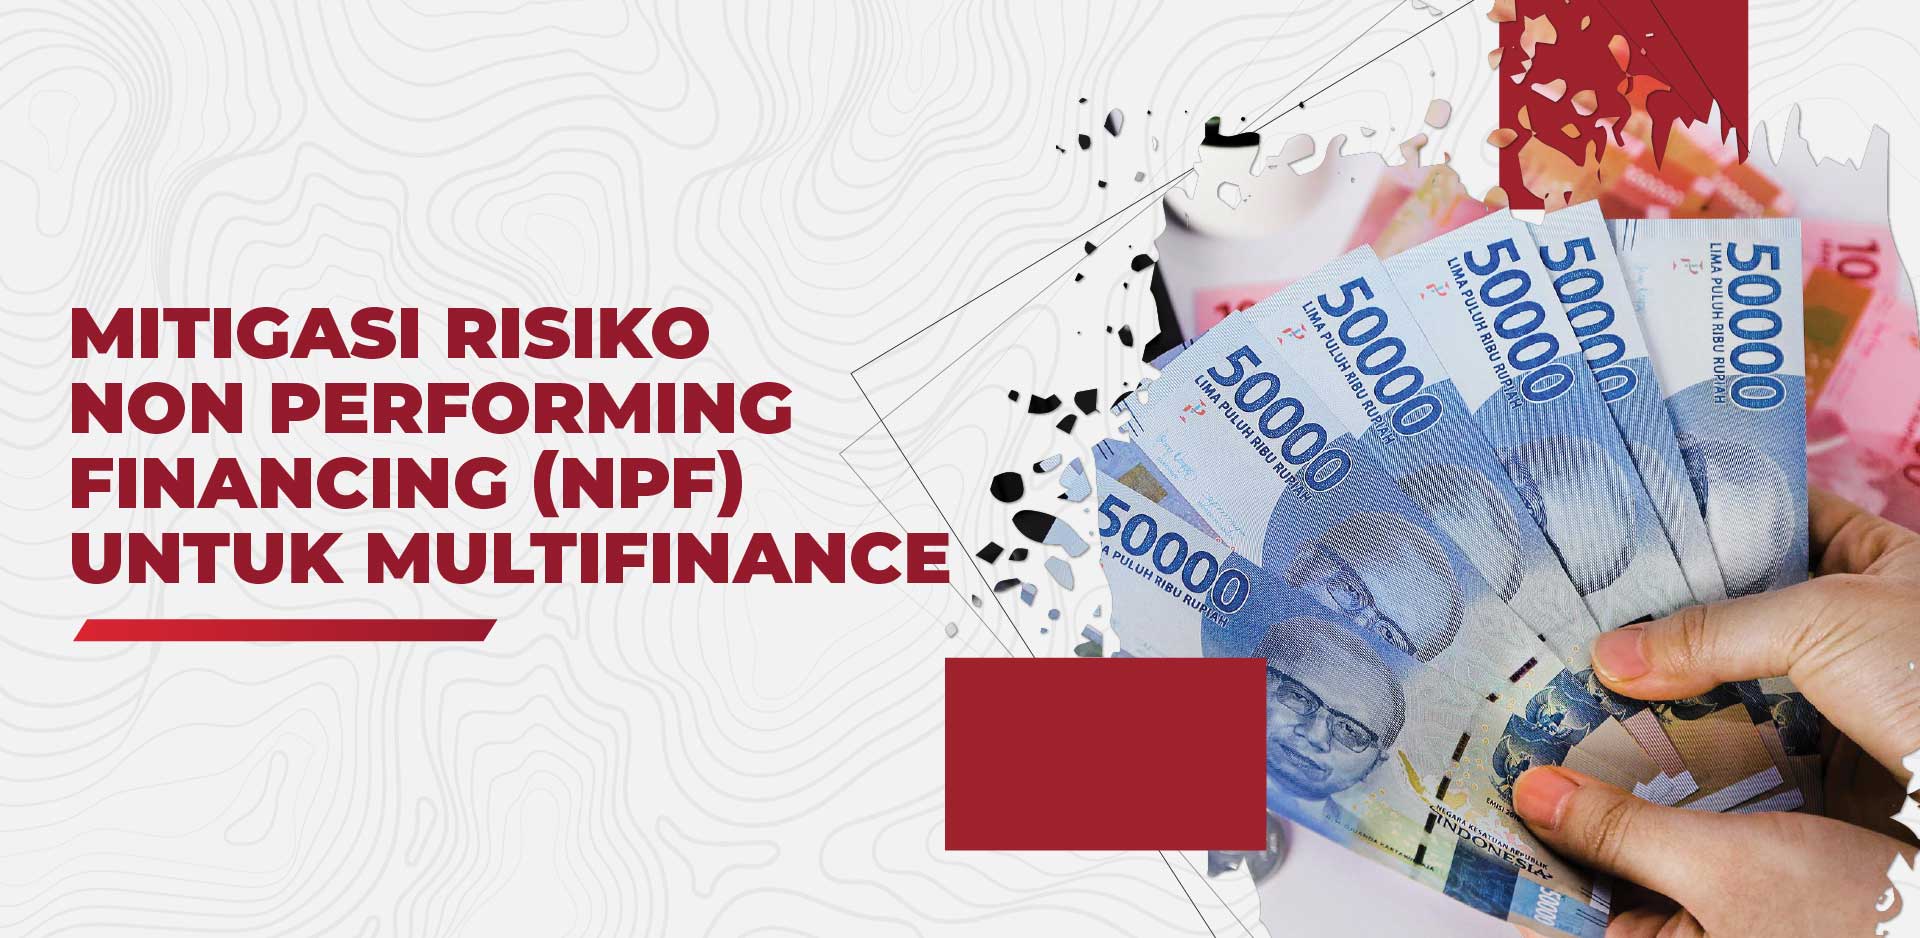 Mitigasi Risiko Non Performing Financing (NPF) untuk Multifinance